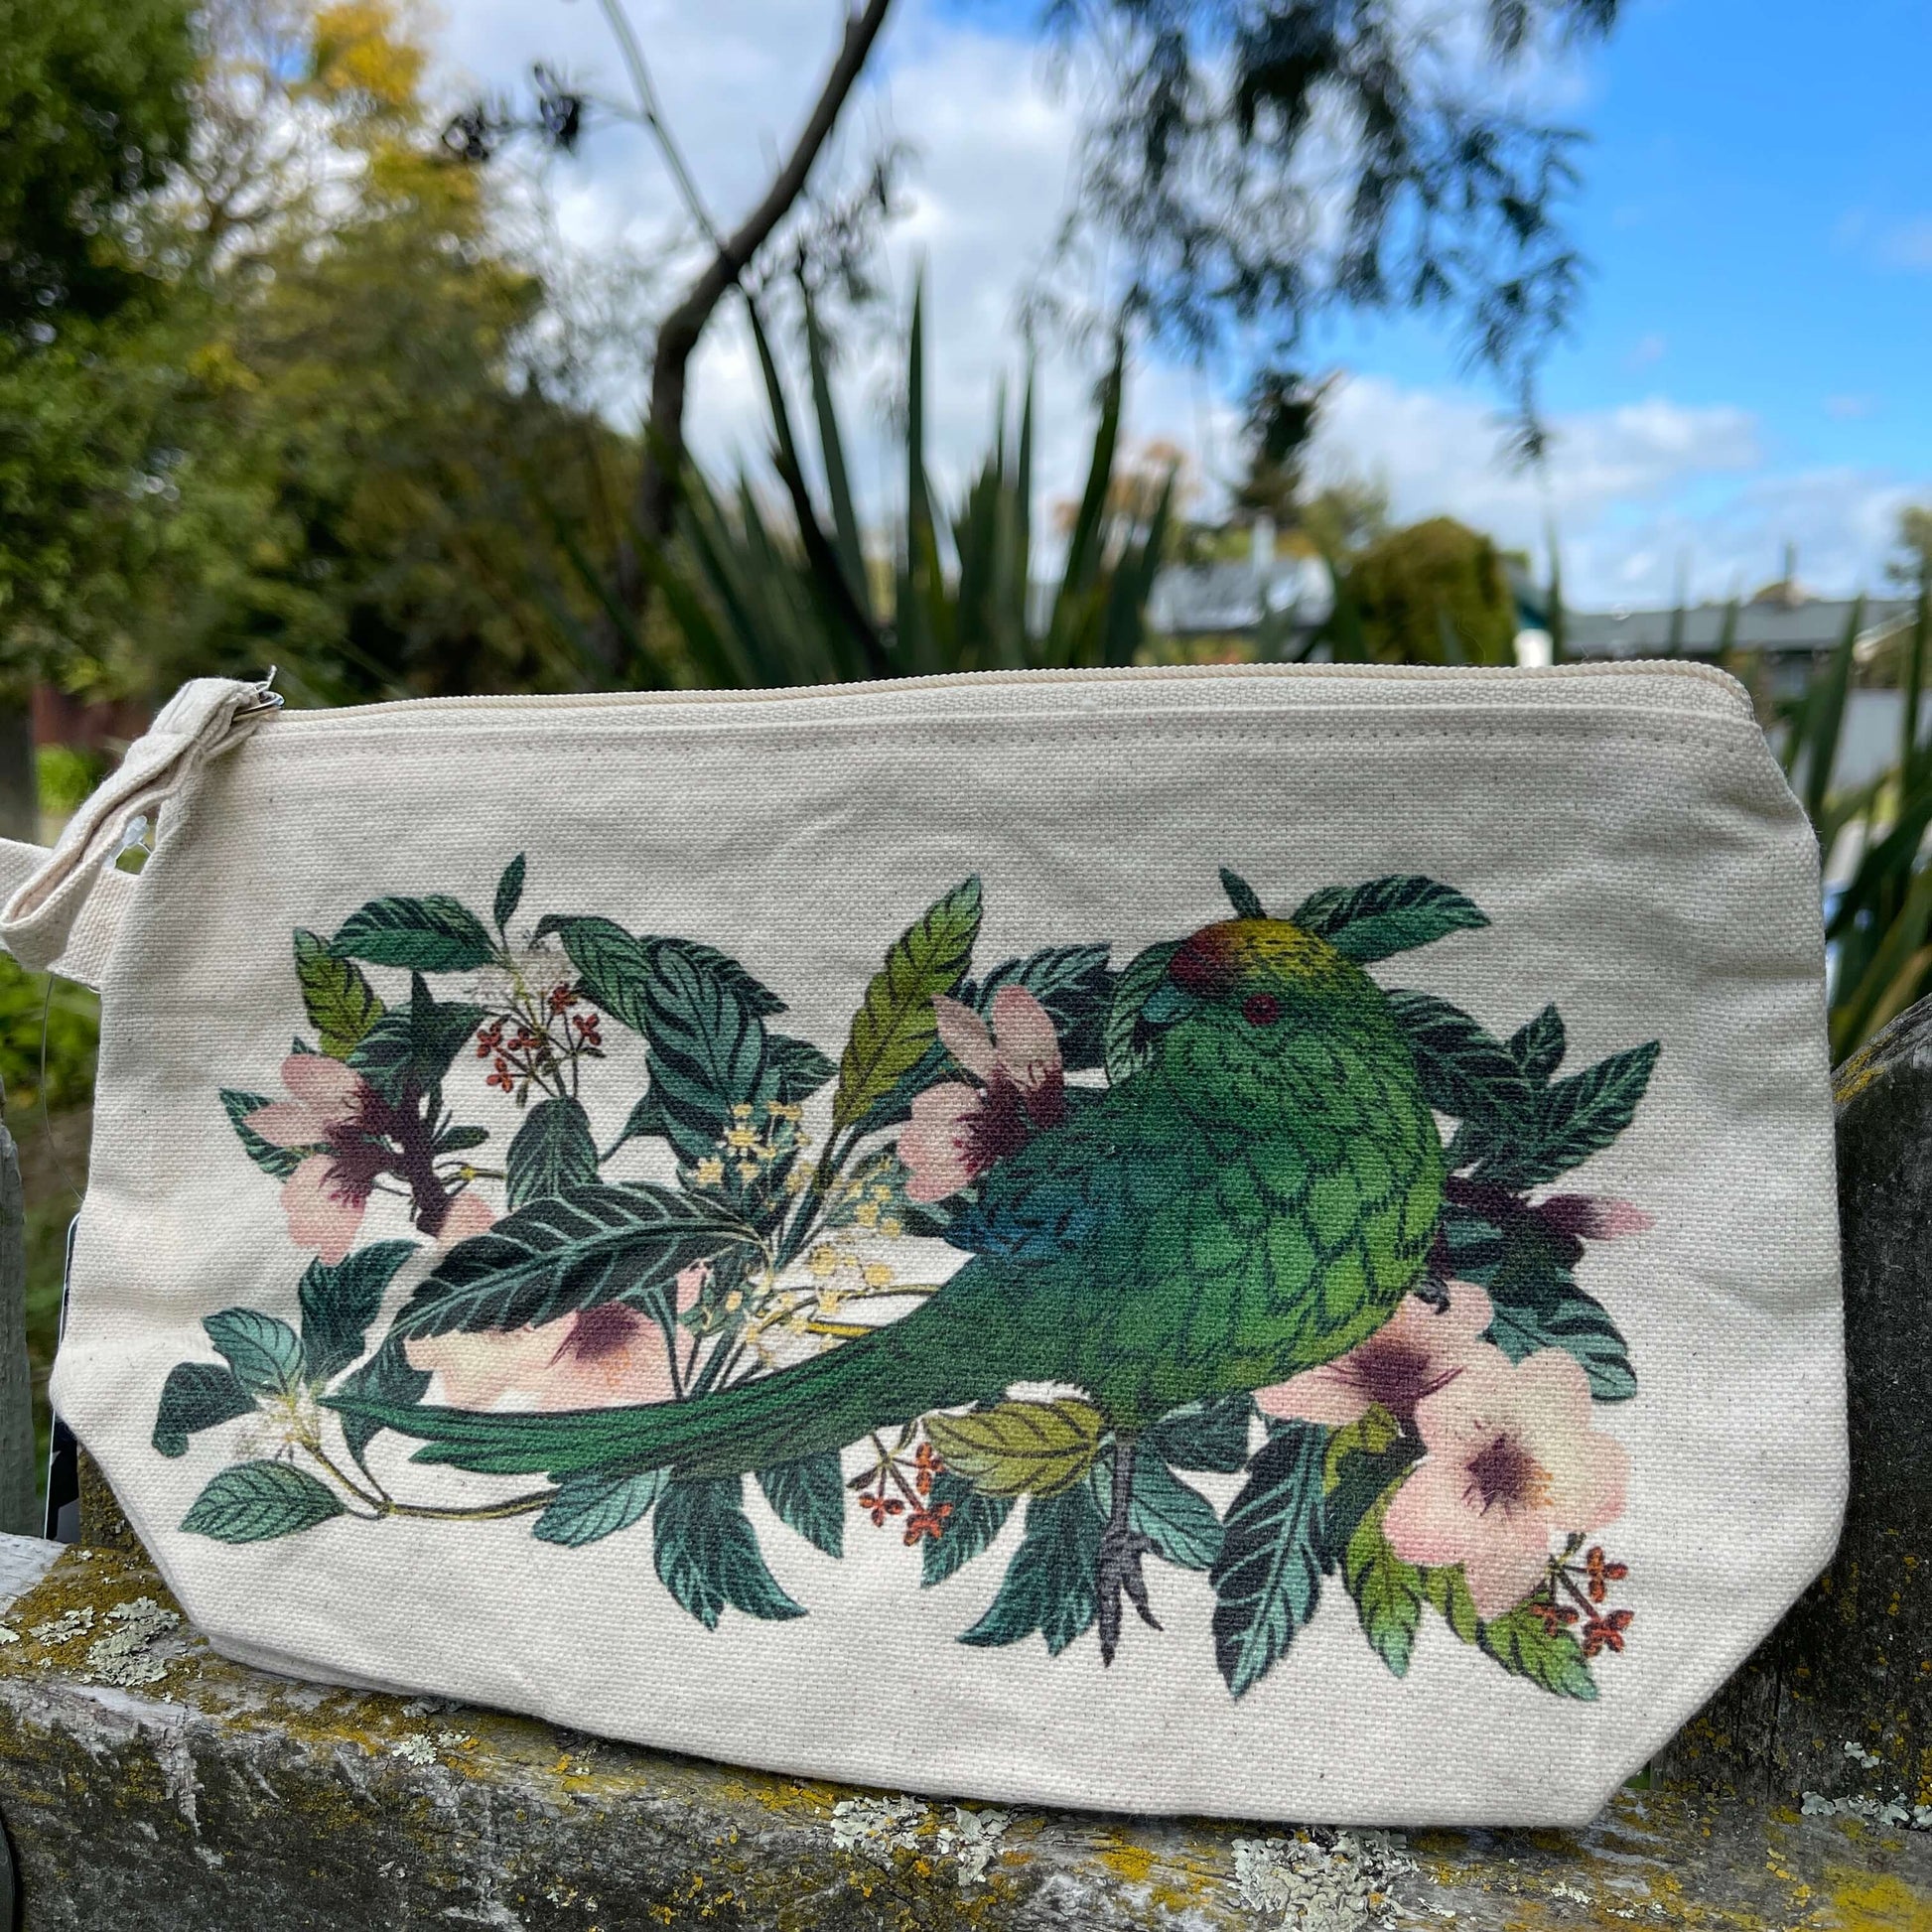 Vibrant Parakeet print on a cotton clutch purse.